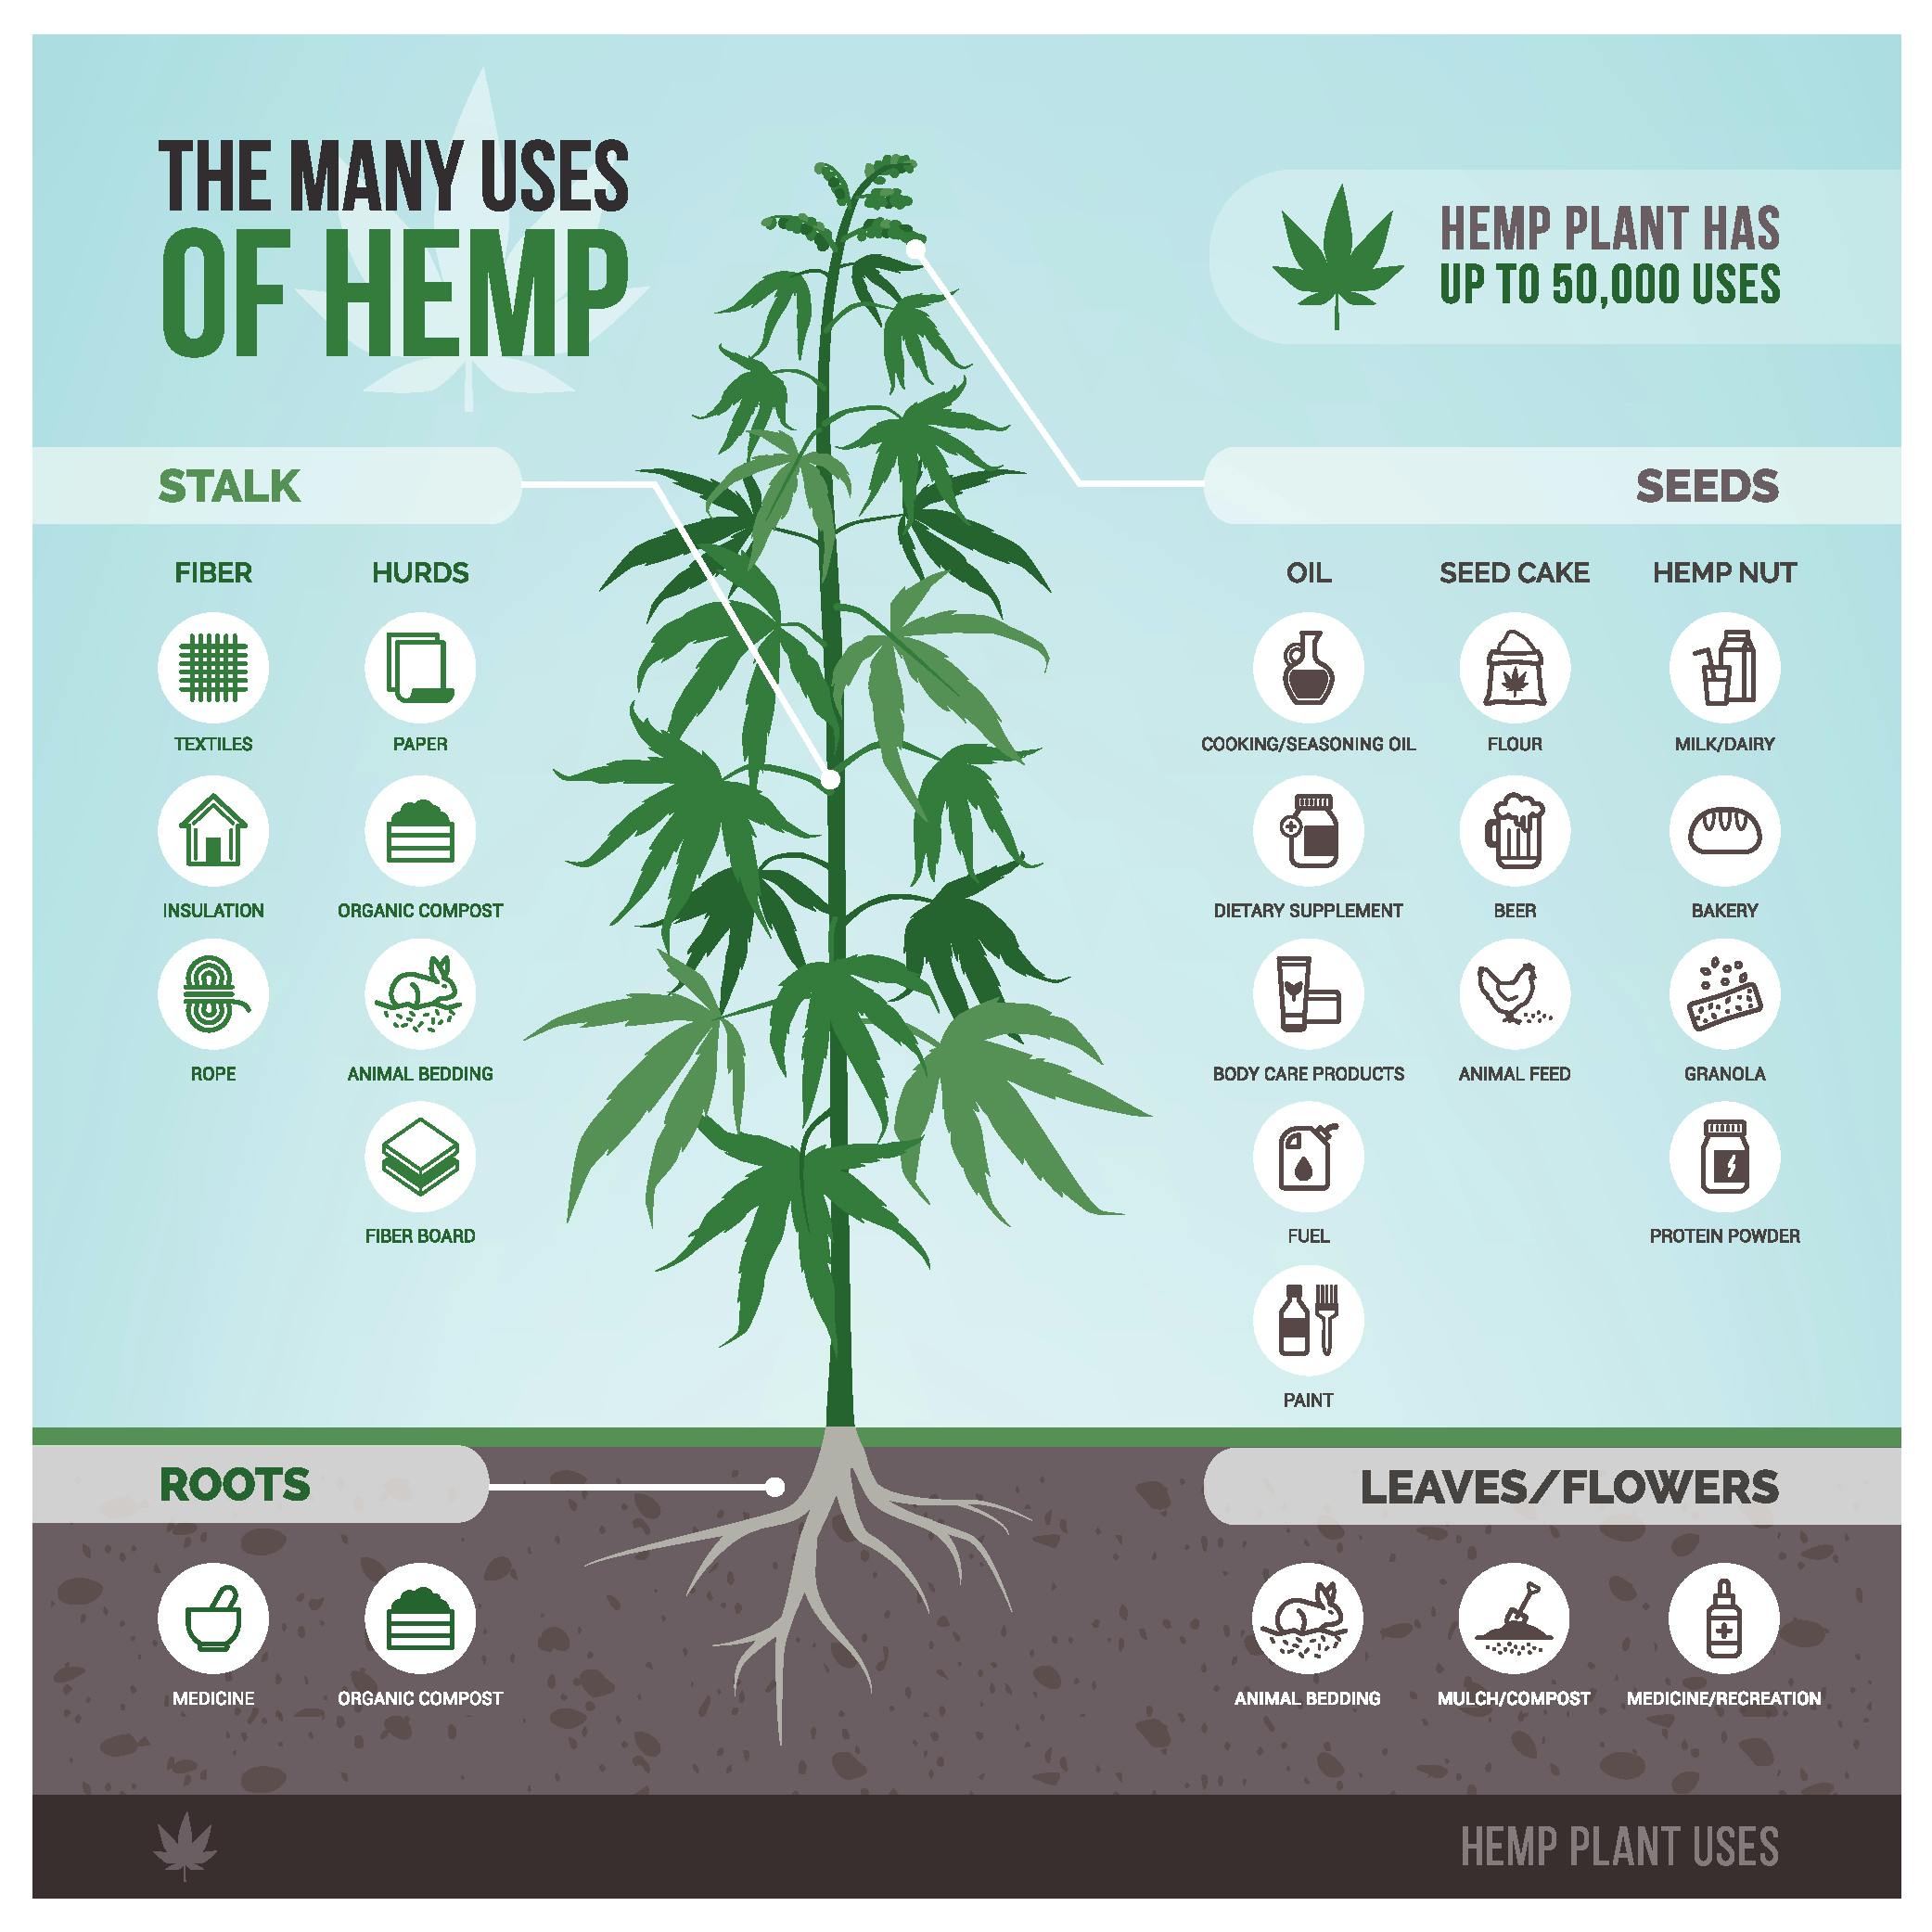 The Many Uses of Hemp infographic. Image via Medium.